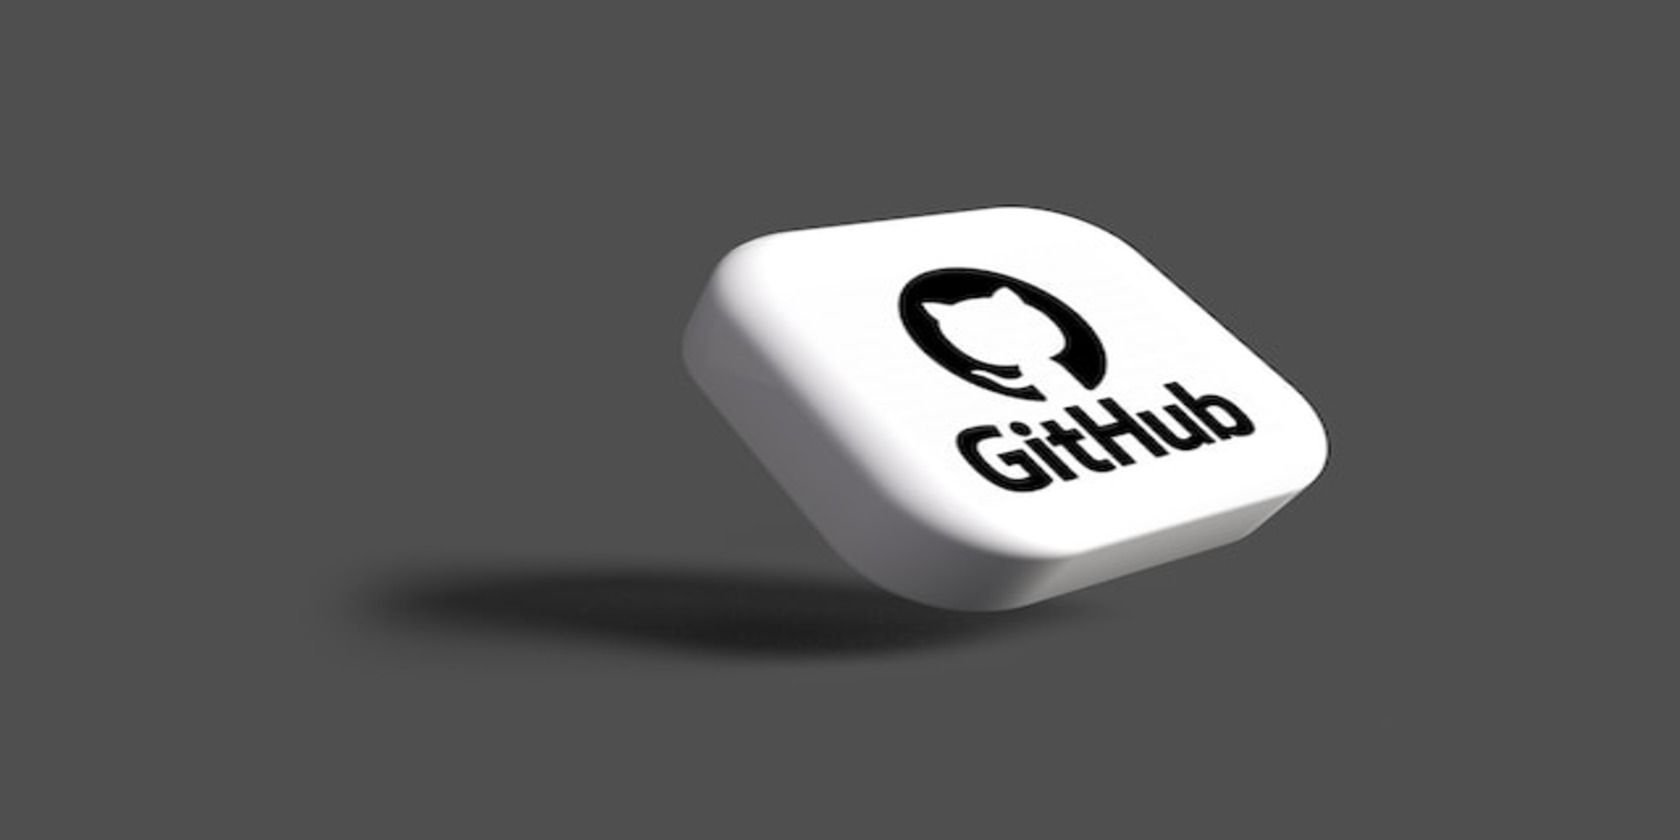 The GitHub logo on a three-dimensional white tile.